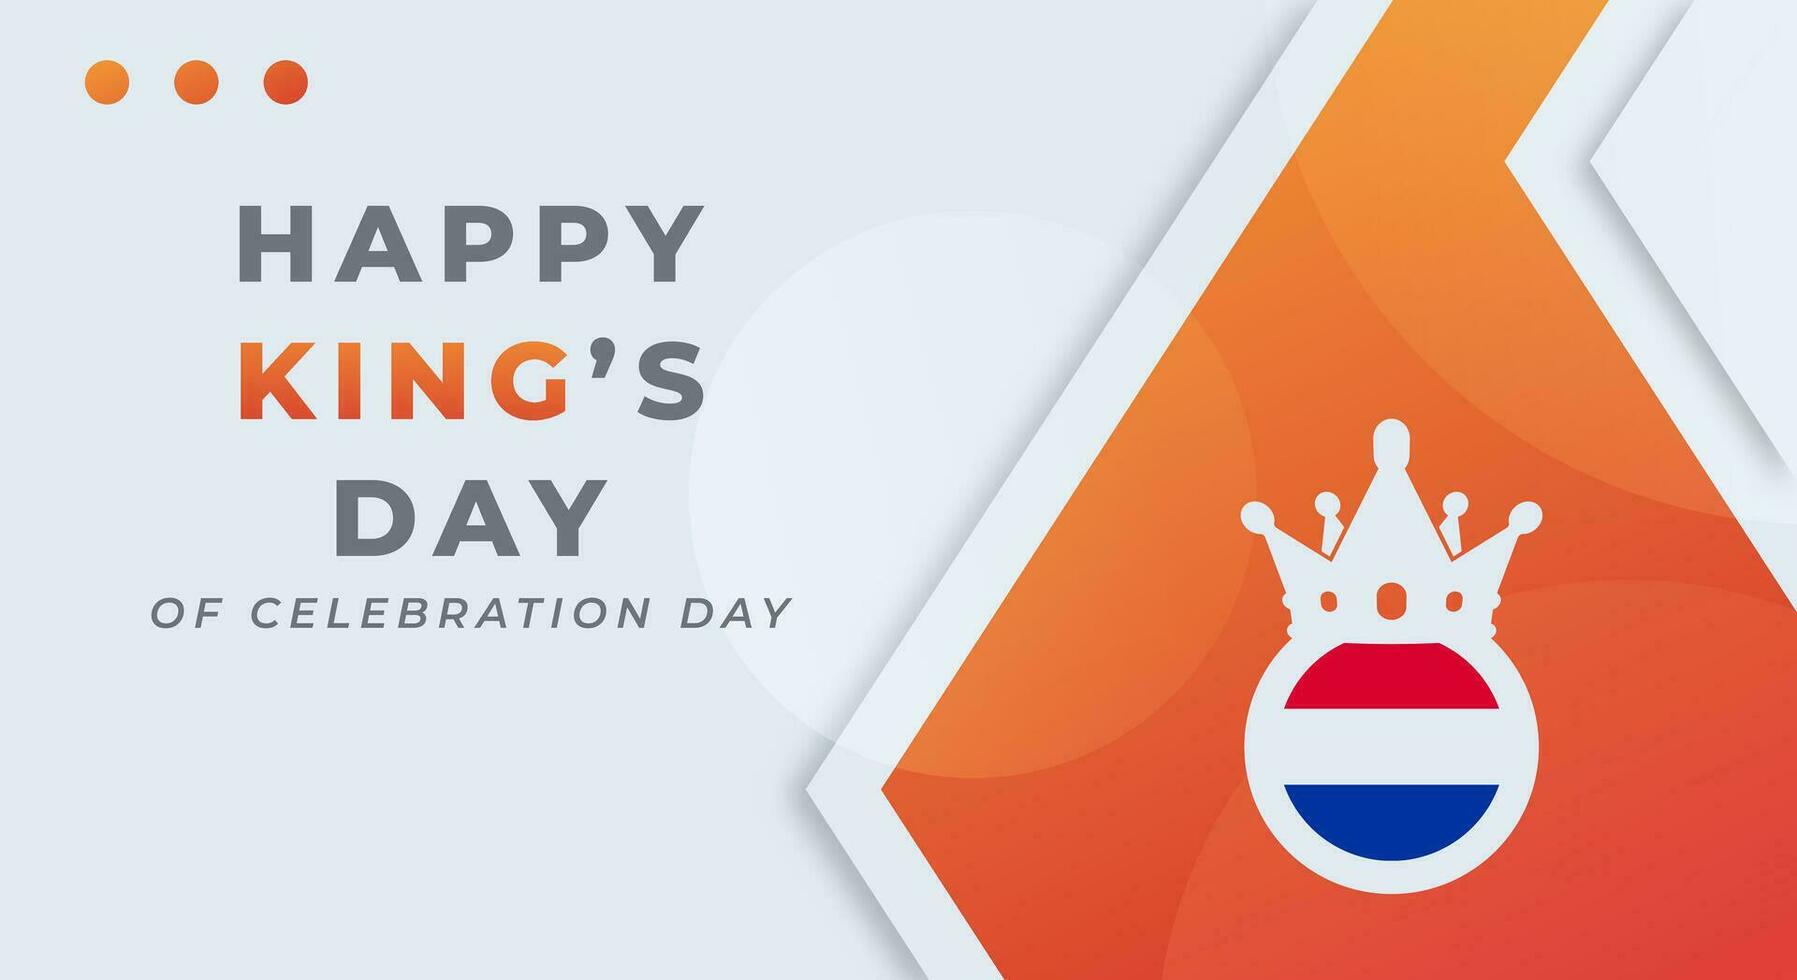 Happy King's Day Koningsdag Celebration Vector Design Illustration for Background, Poster, Banner, Advertising, Greeting Card